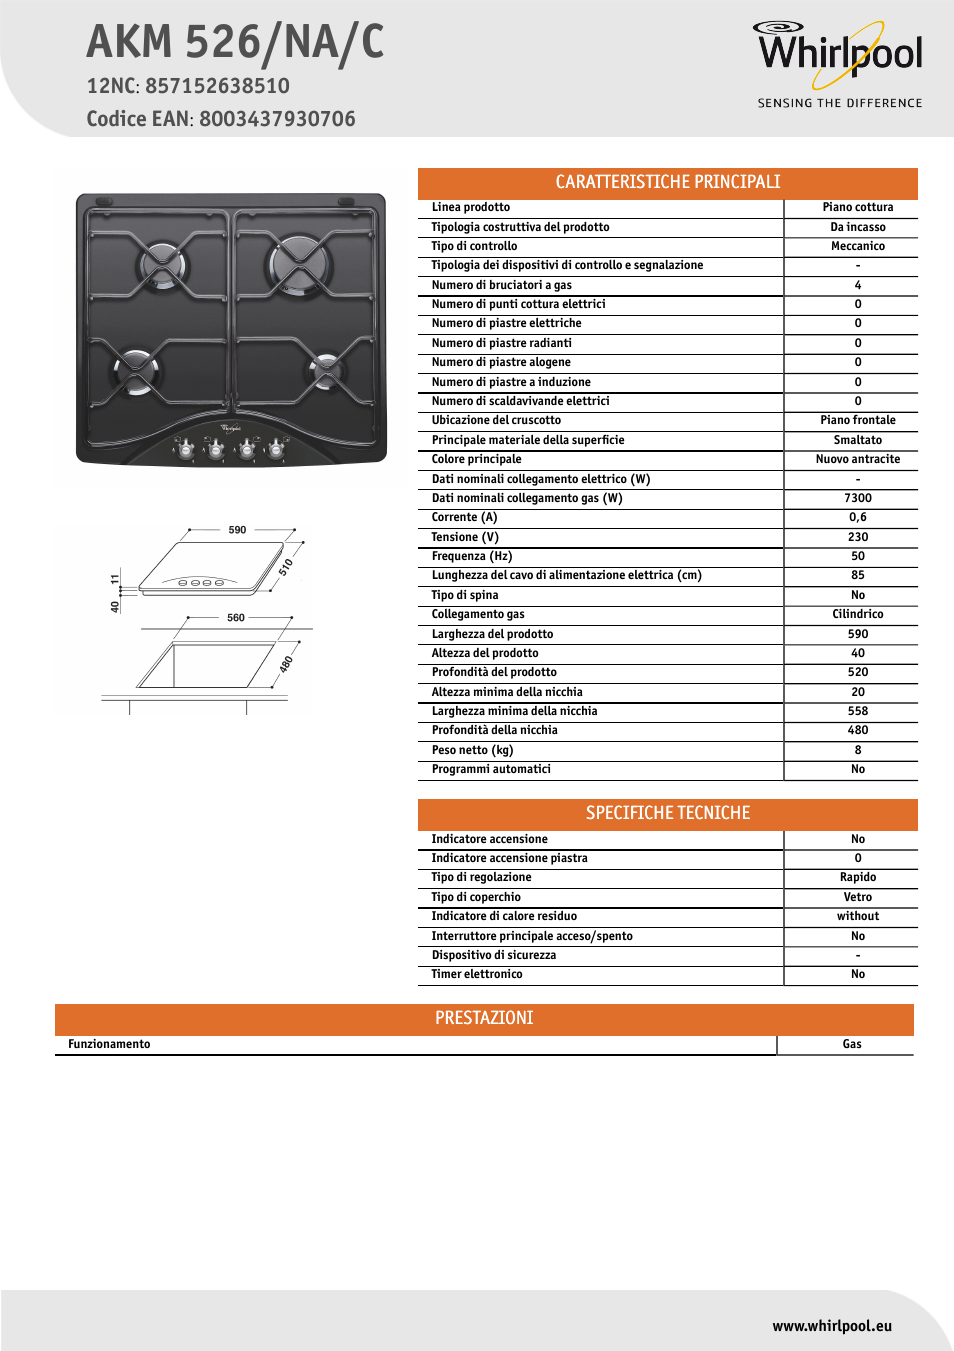 Whirlpool AKM 526-NA-C Manuale d'uso | Pagine: 1